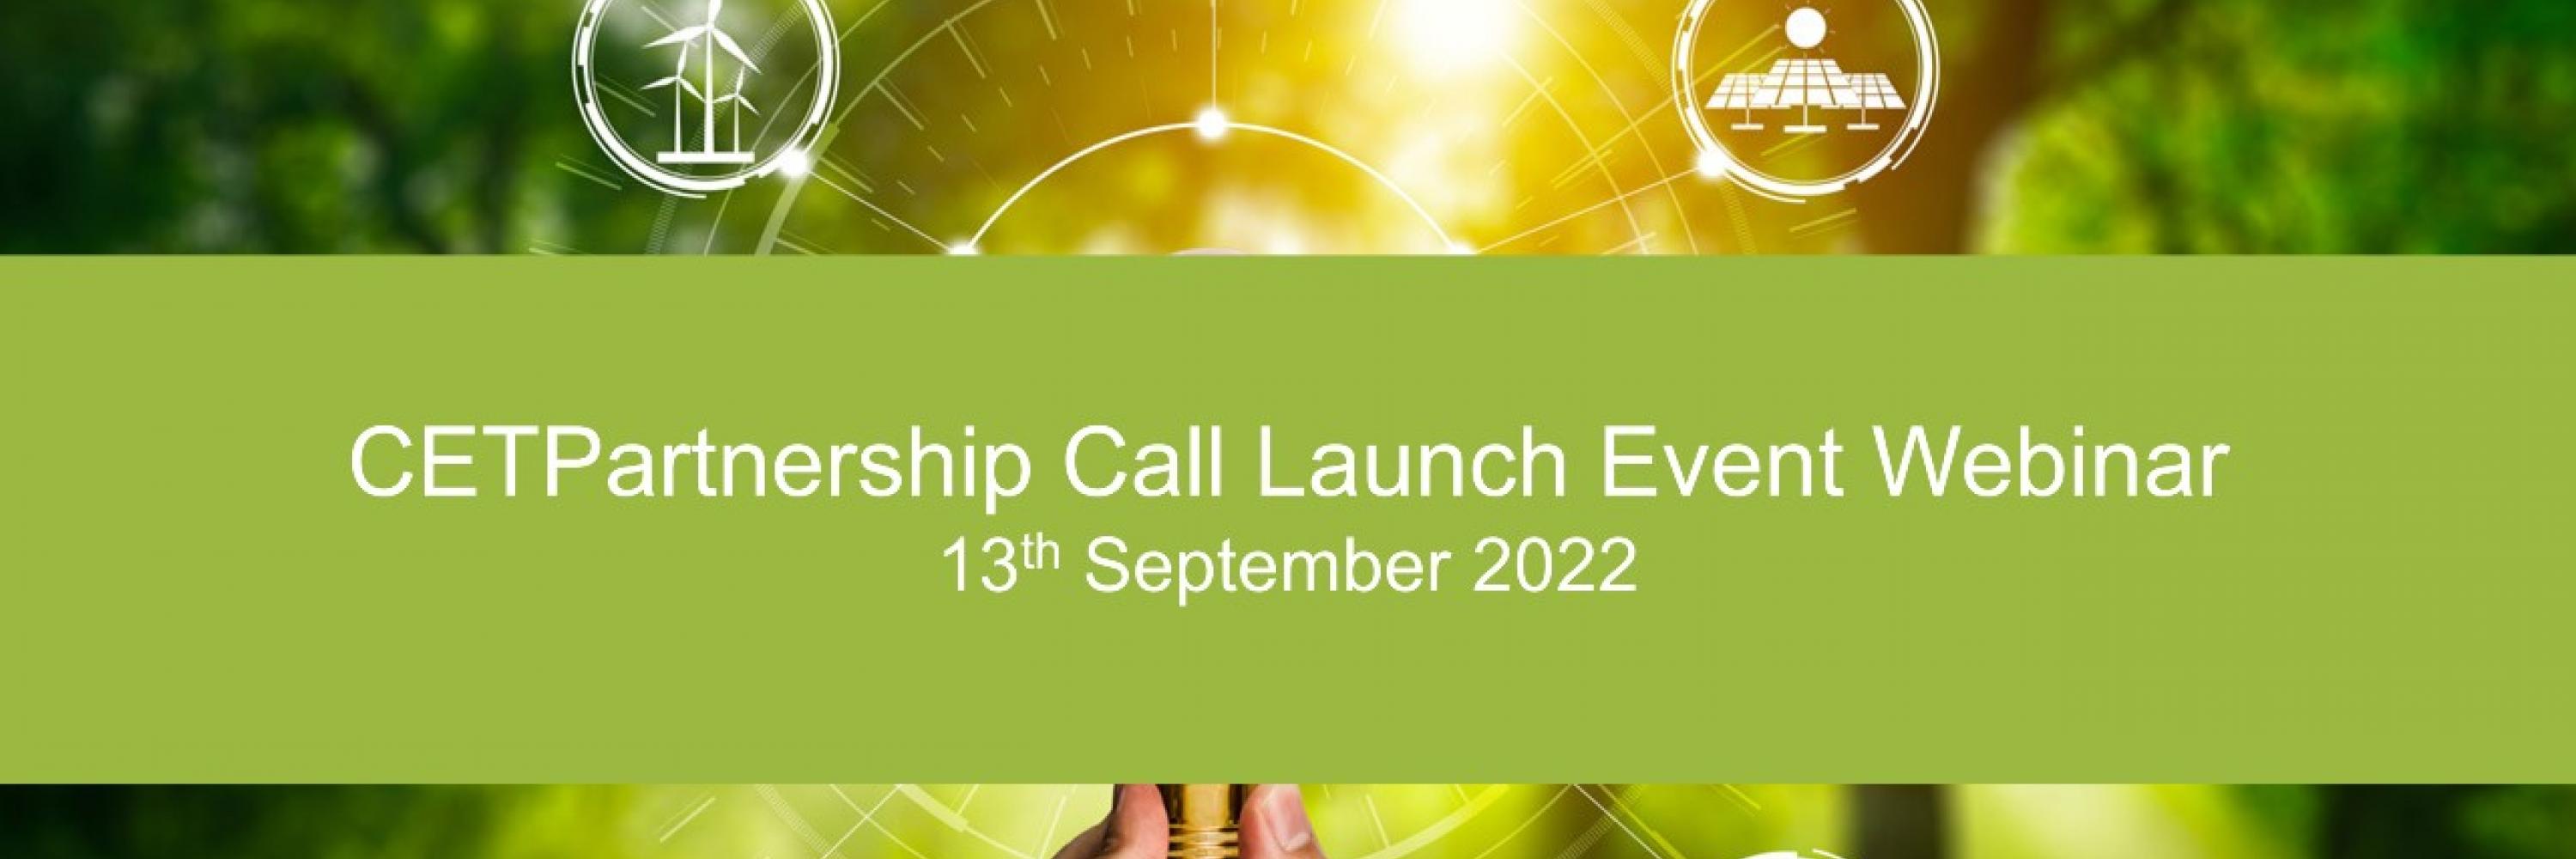 cetpartnership-call-launch-event-webinar